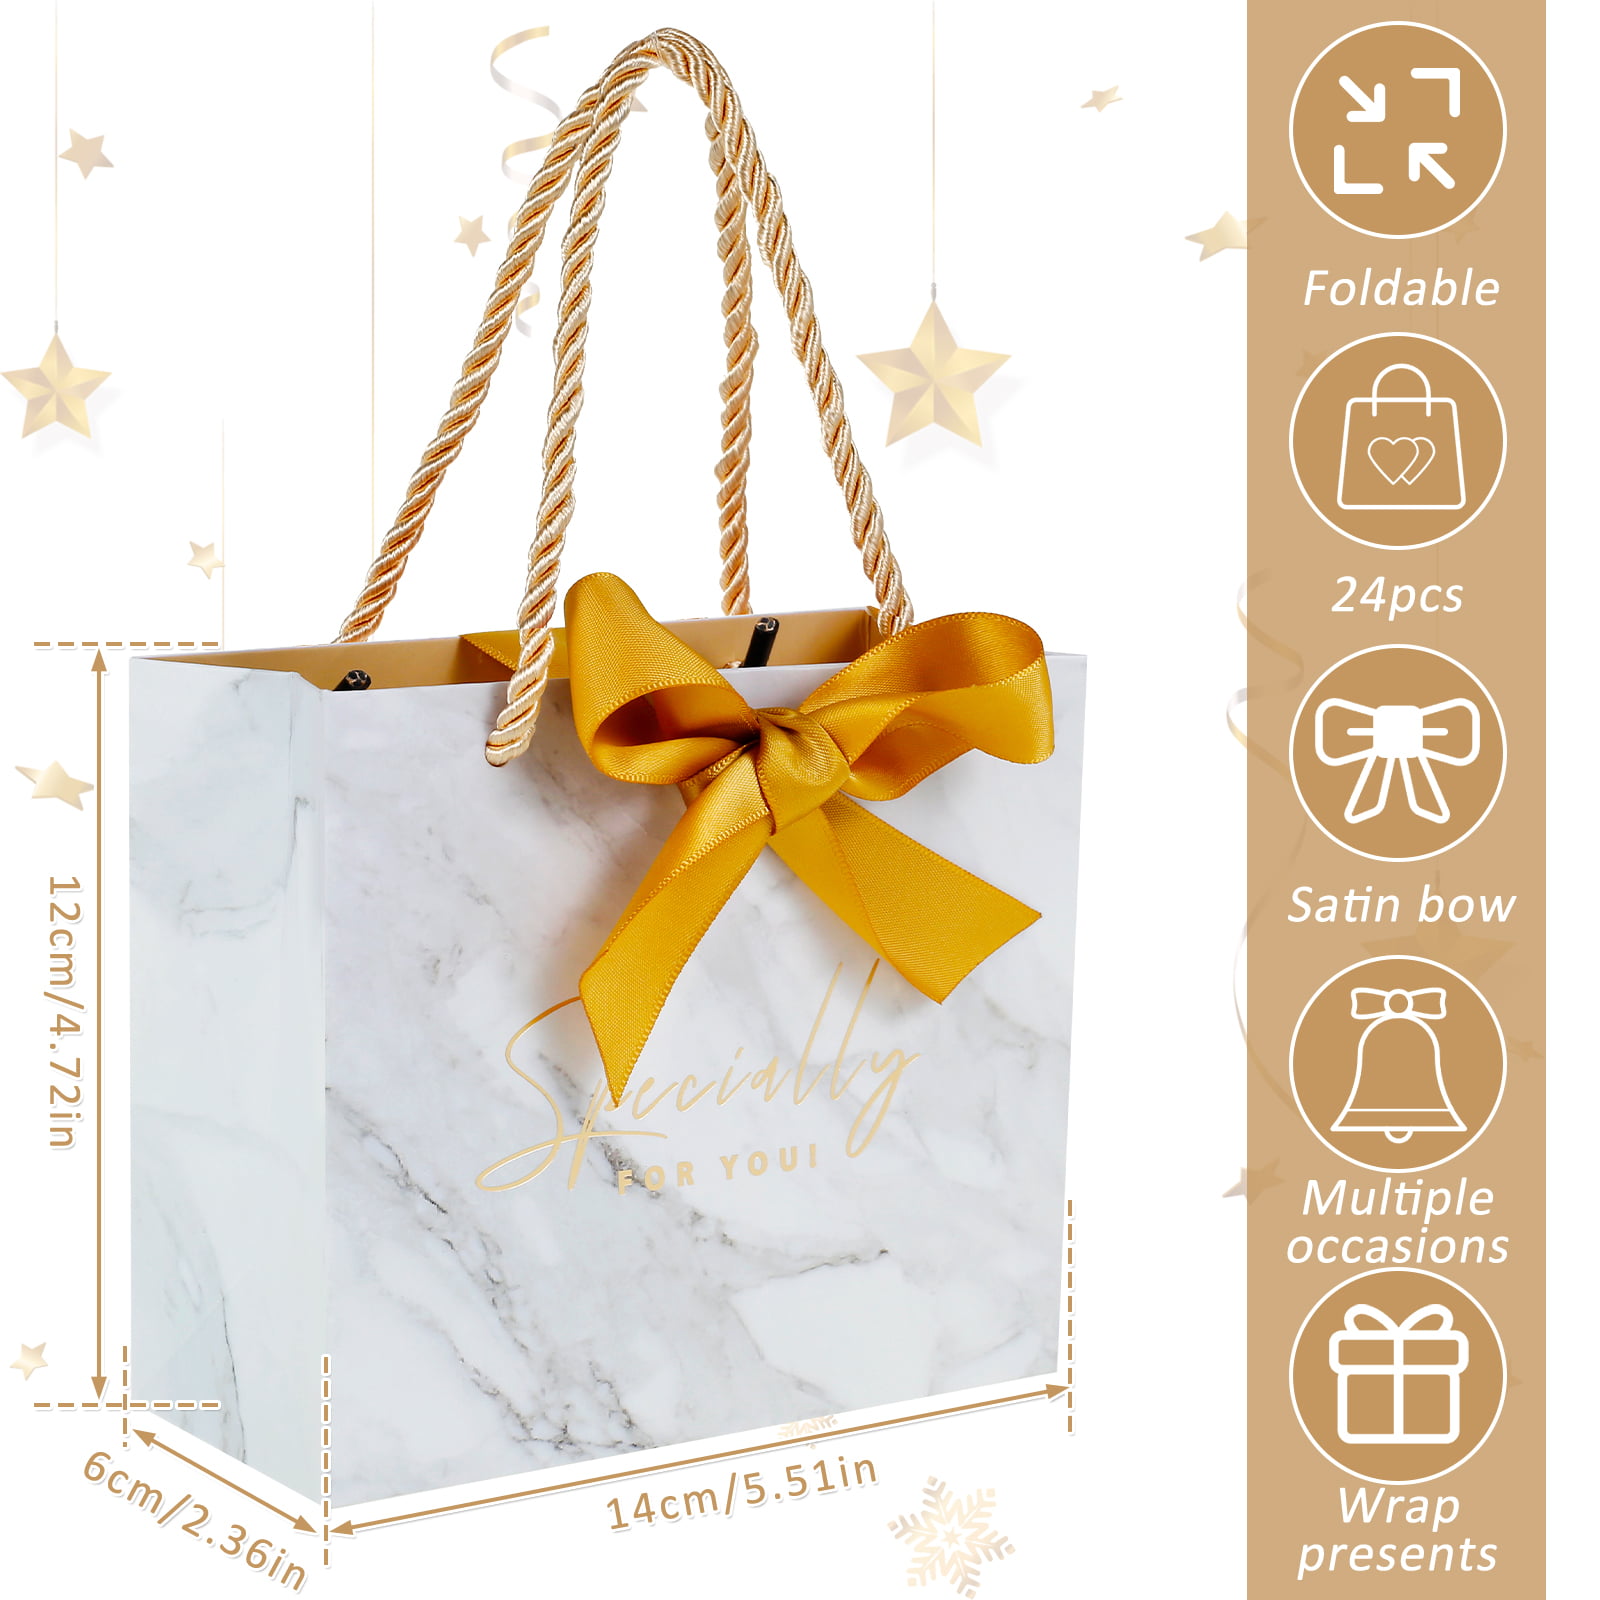 Unique Bargains Paper Gift Bag Pack Silver Bow Storage Bag For Party Favor  50 Pcs Gold 4.8x3x9.1 Inch : Target